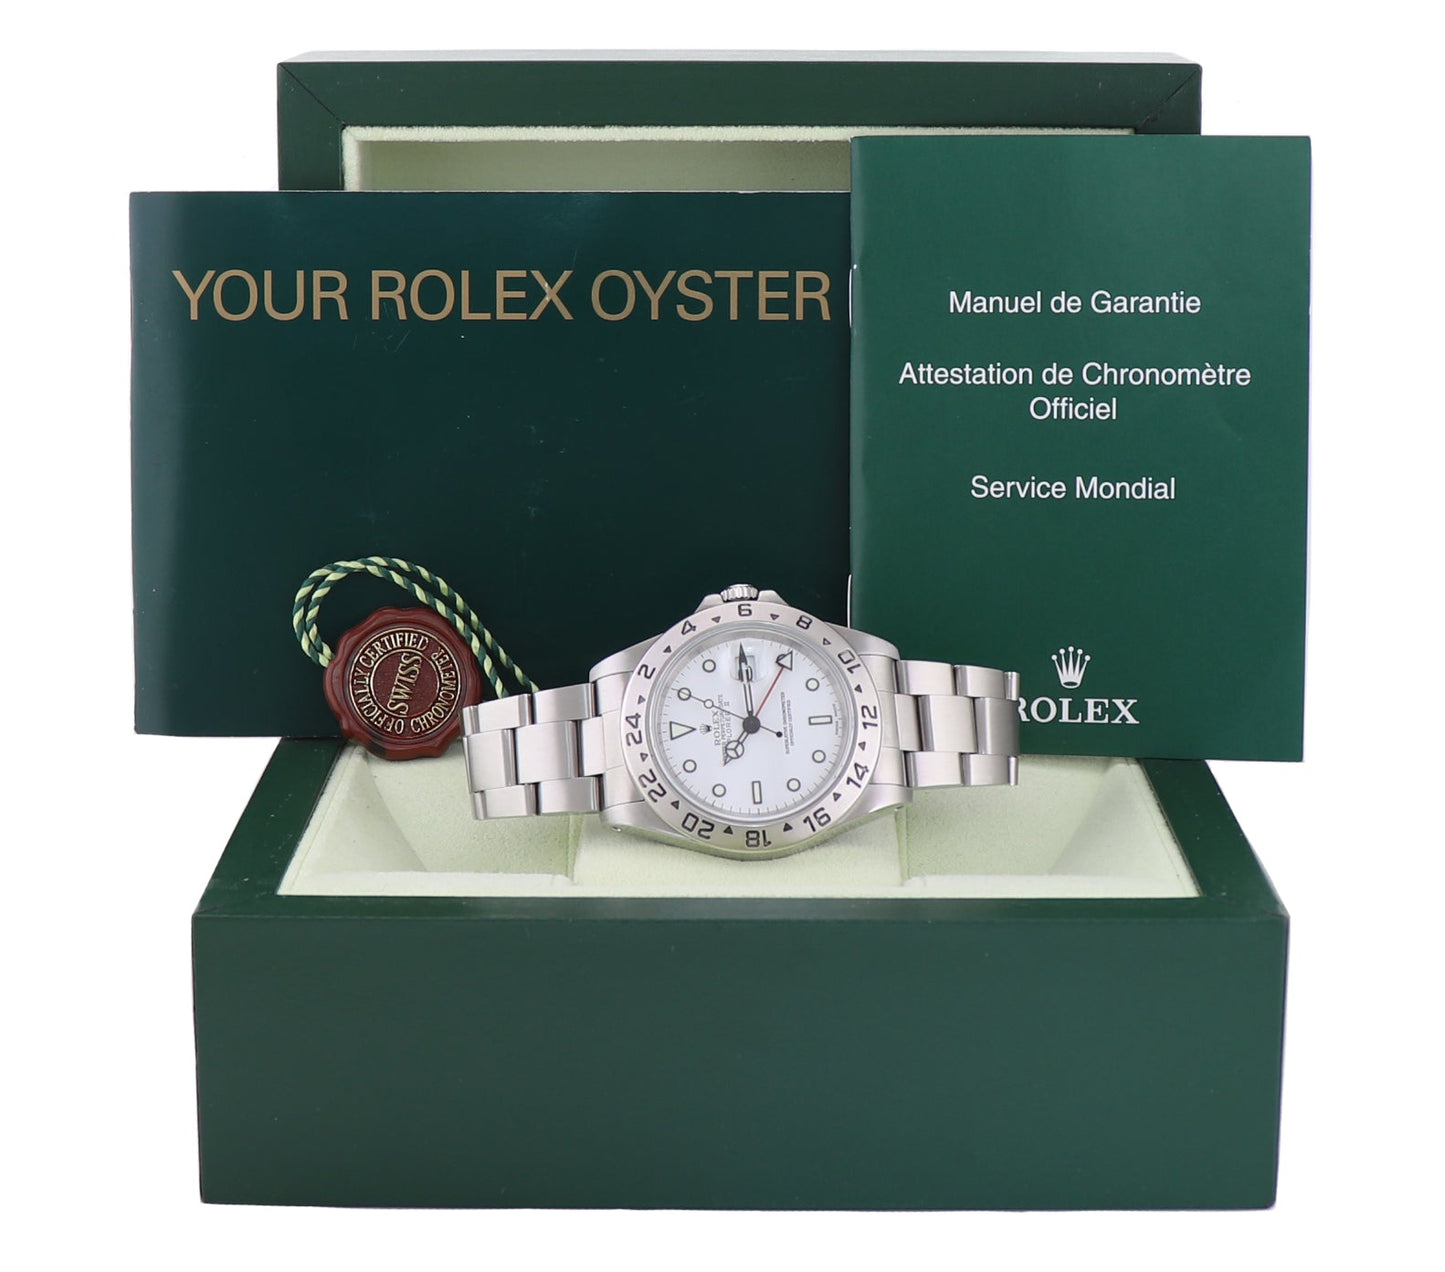 2002 MINT Rolex Explorer II White 16570 40mm Polar GMT Watch Box